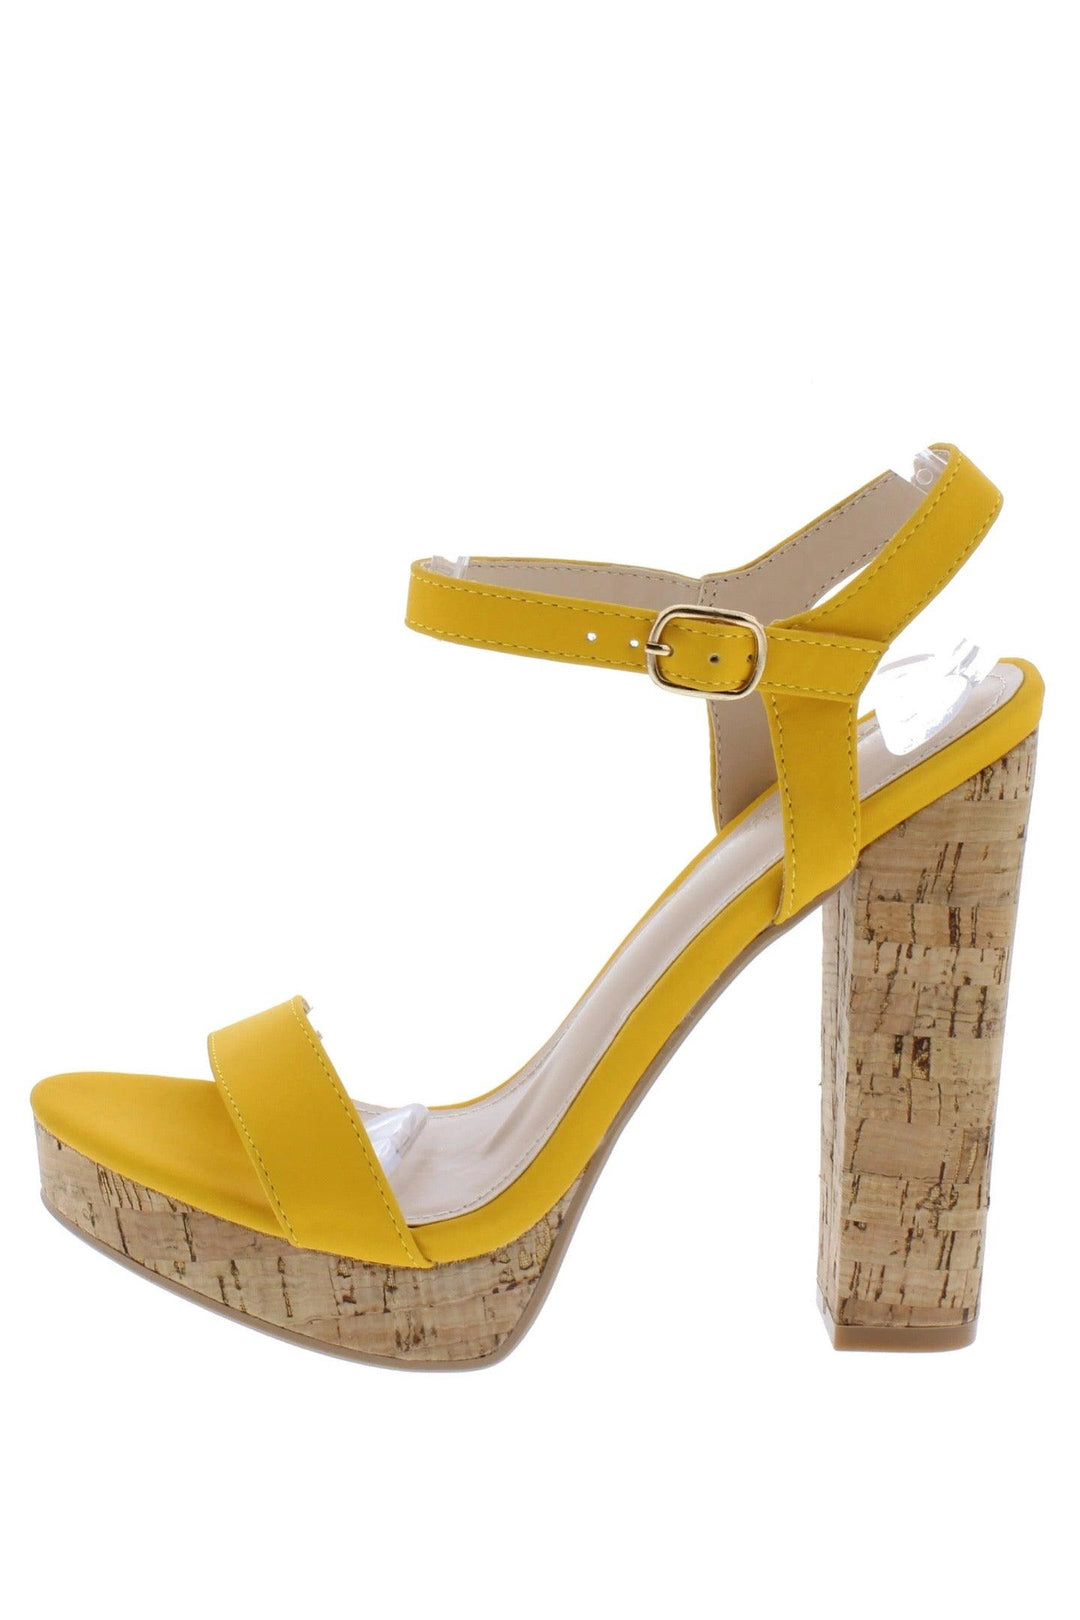 Calabasas Open Toe Cork Heels, Size 8.5 in Mustard - 7Kouture